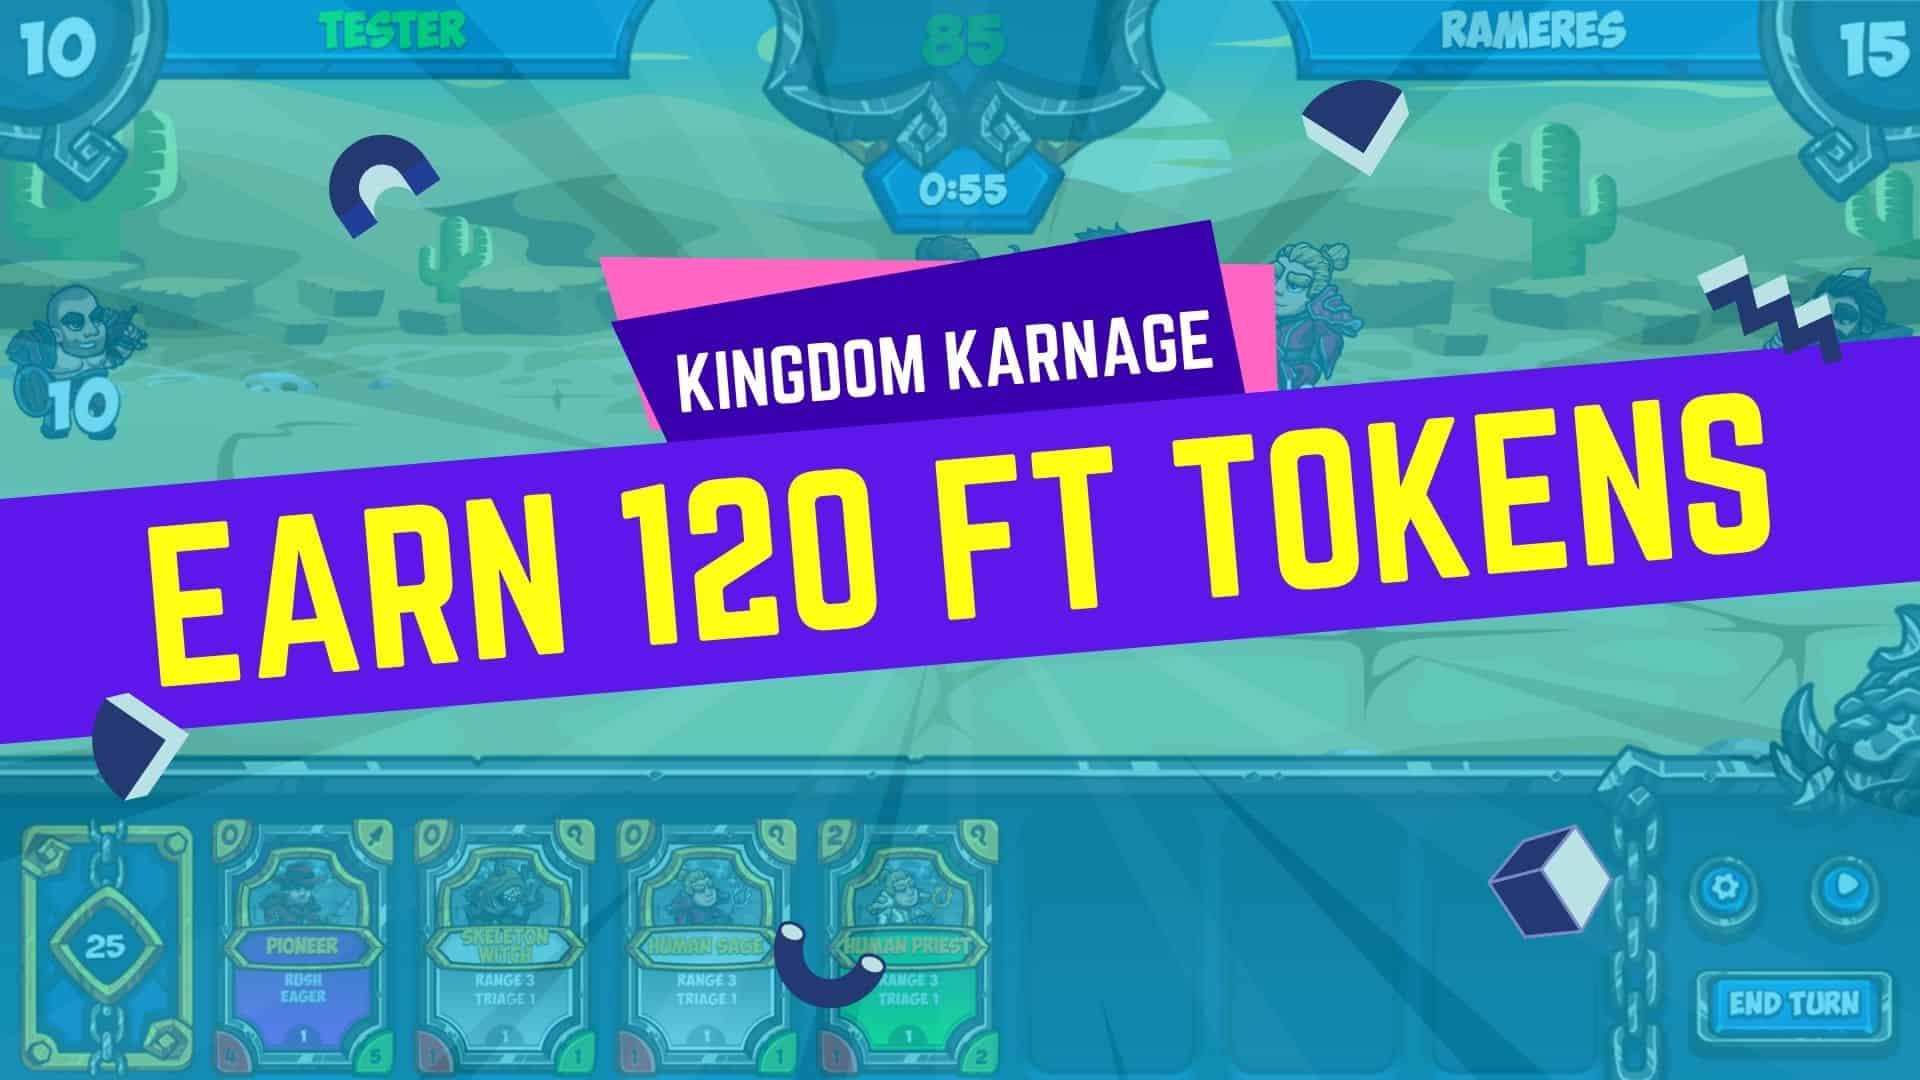 Play Kingdom Karnage & Earn 120 JENJ-Backed Tokens